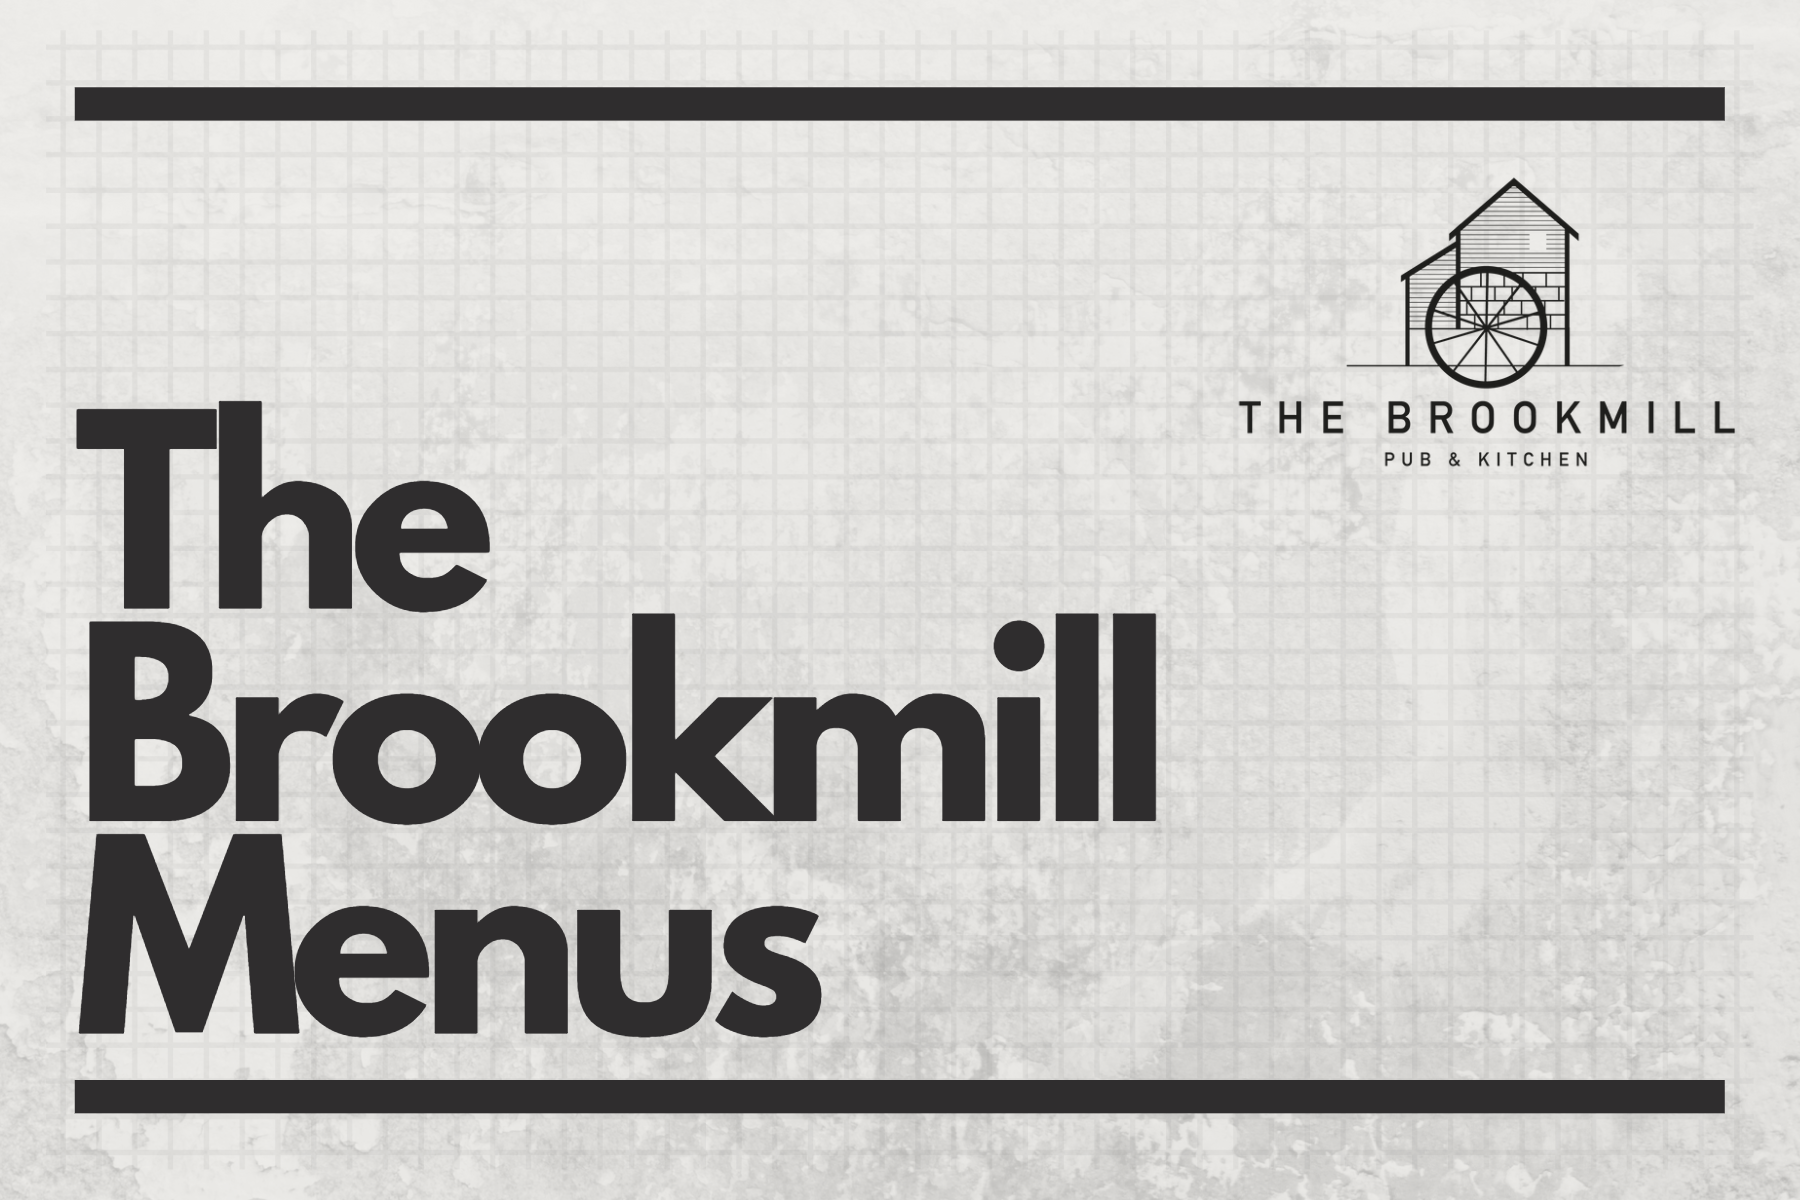 The Brookmill Menus